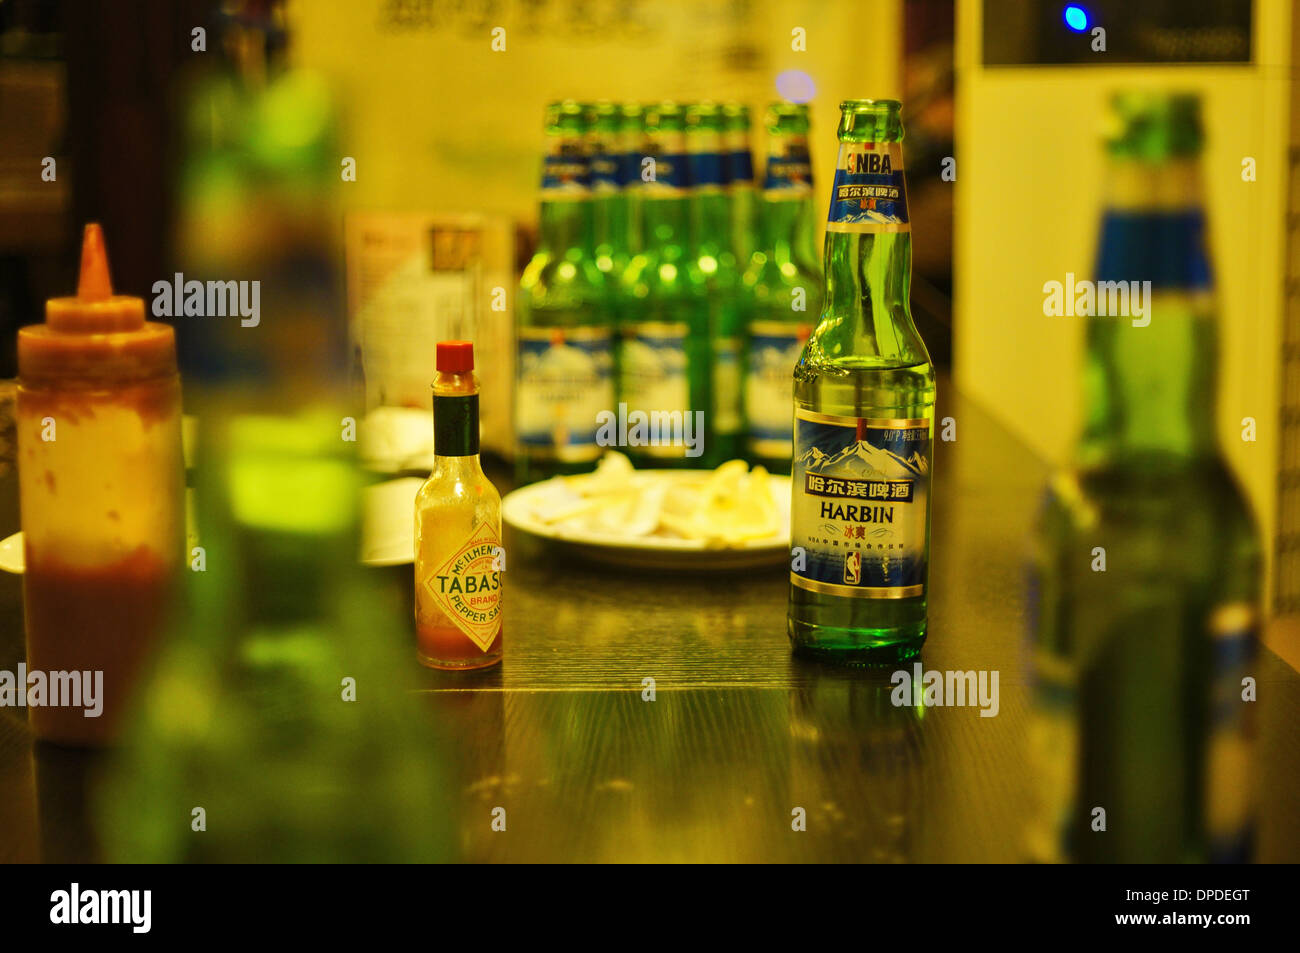 Empty bottles of Harbin beer, China Stock Photo